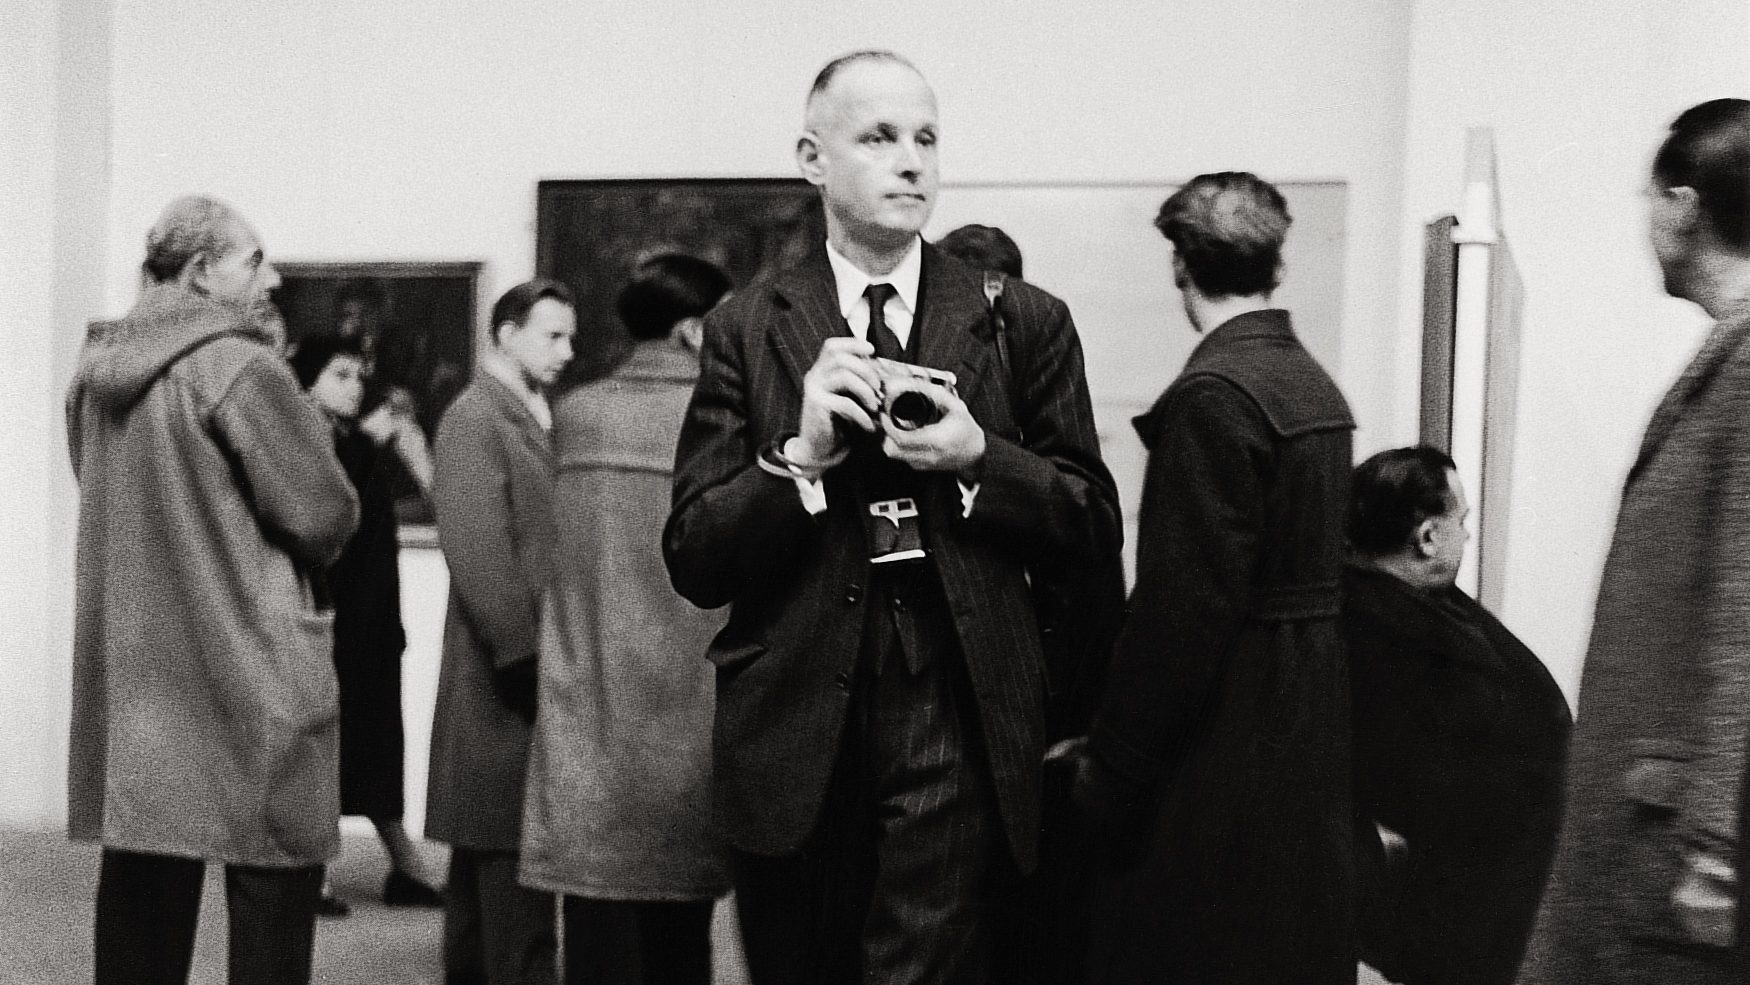 Henri Cartier-Bresson during Oskar Kokoschka’s exhibition at the Vienna Secession 
gallery, 1955. Photo: Imagno/Getty Images